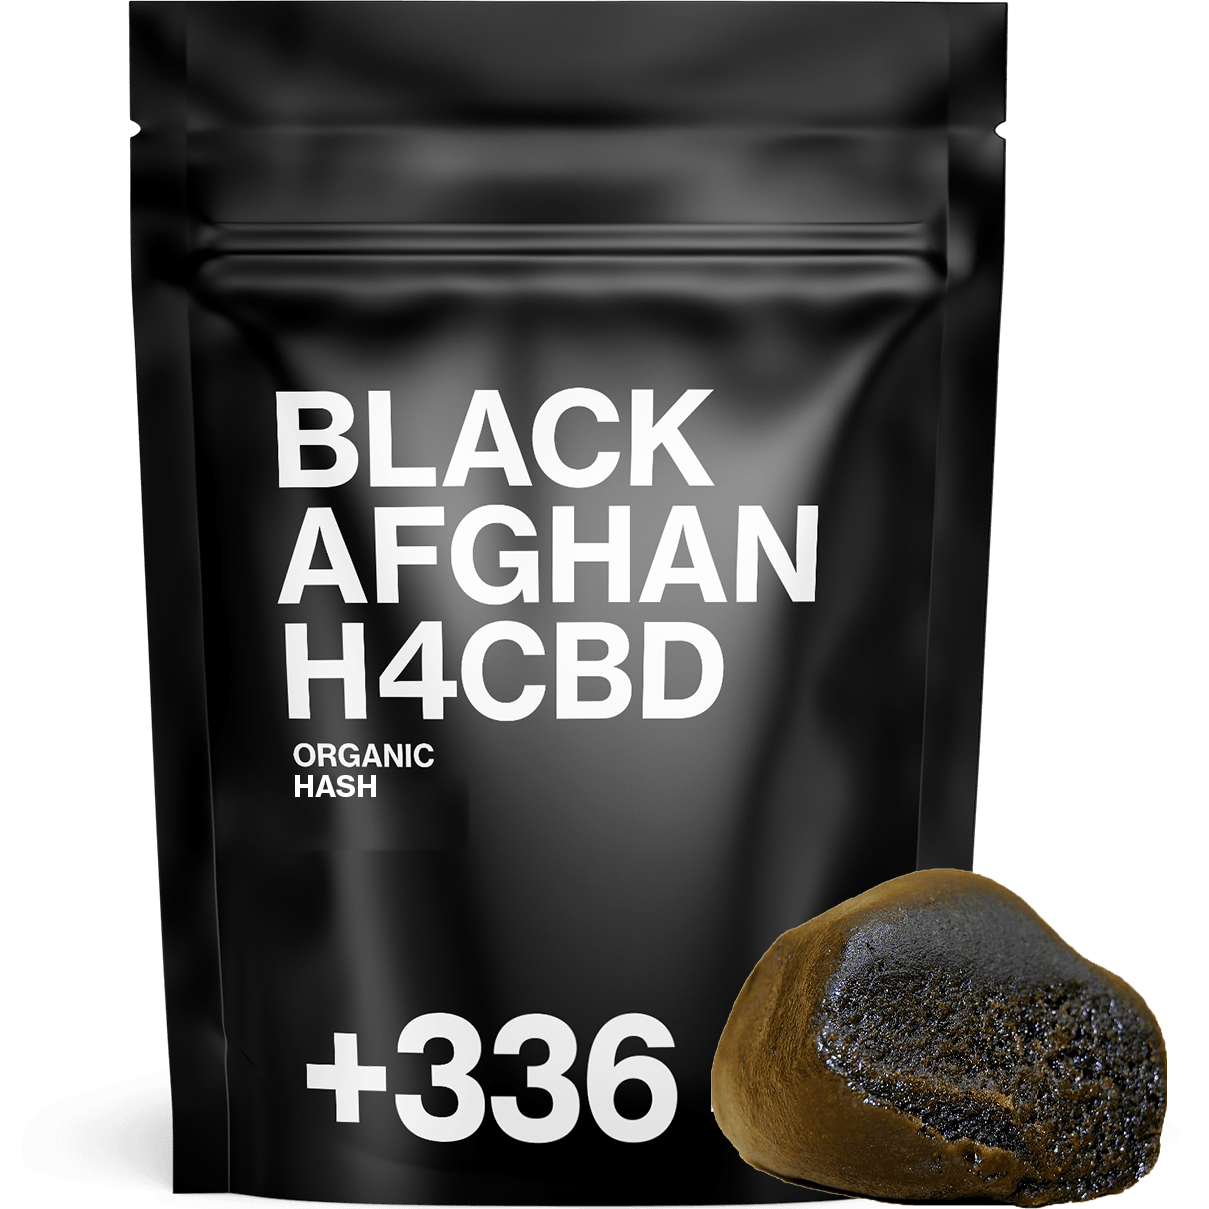 Black Afghan H4CBD 🥷🏻